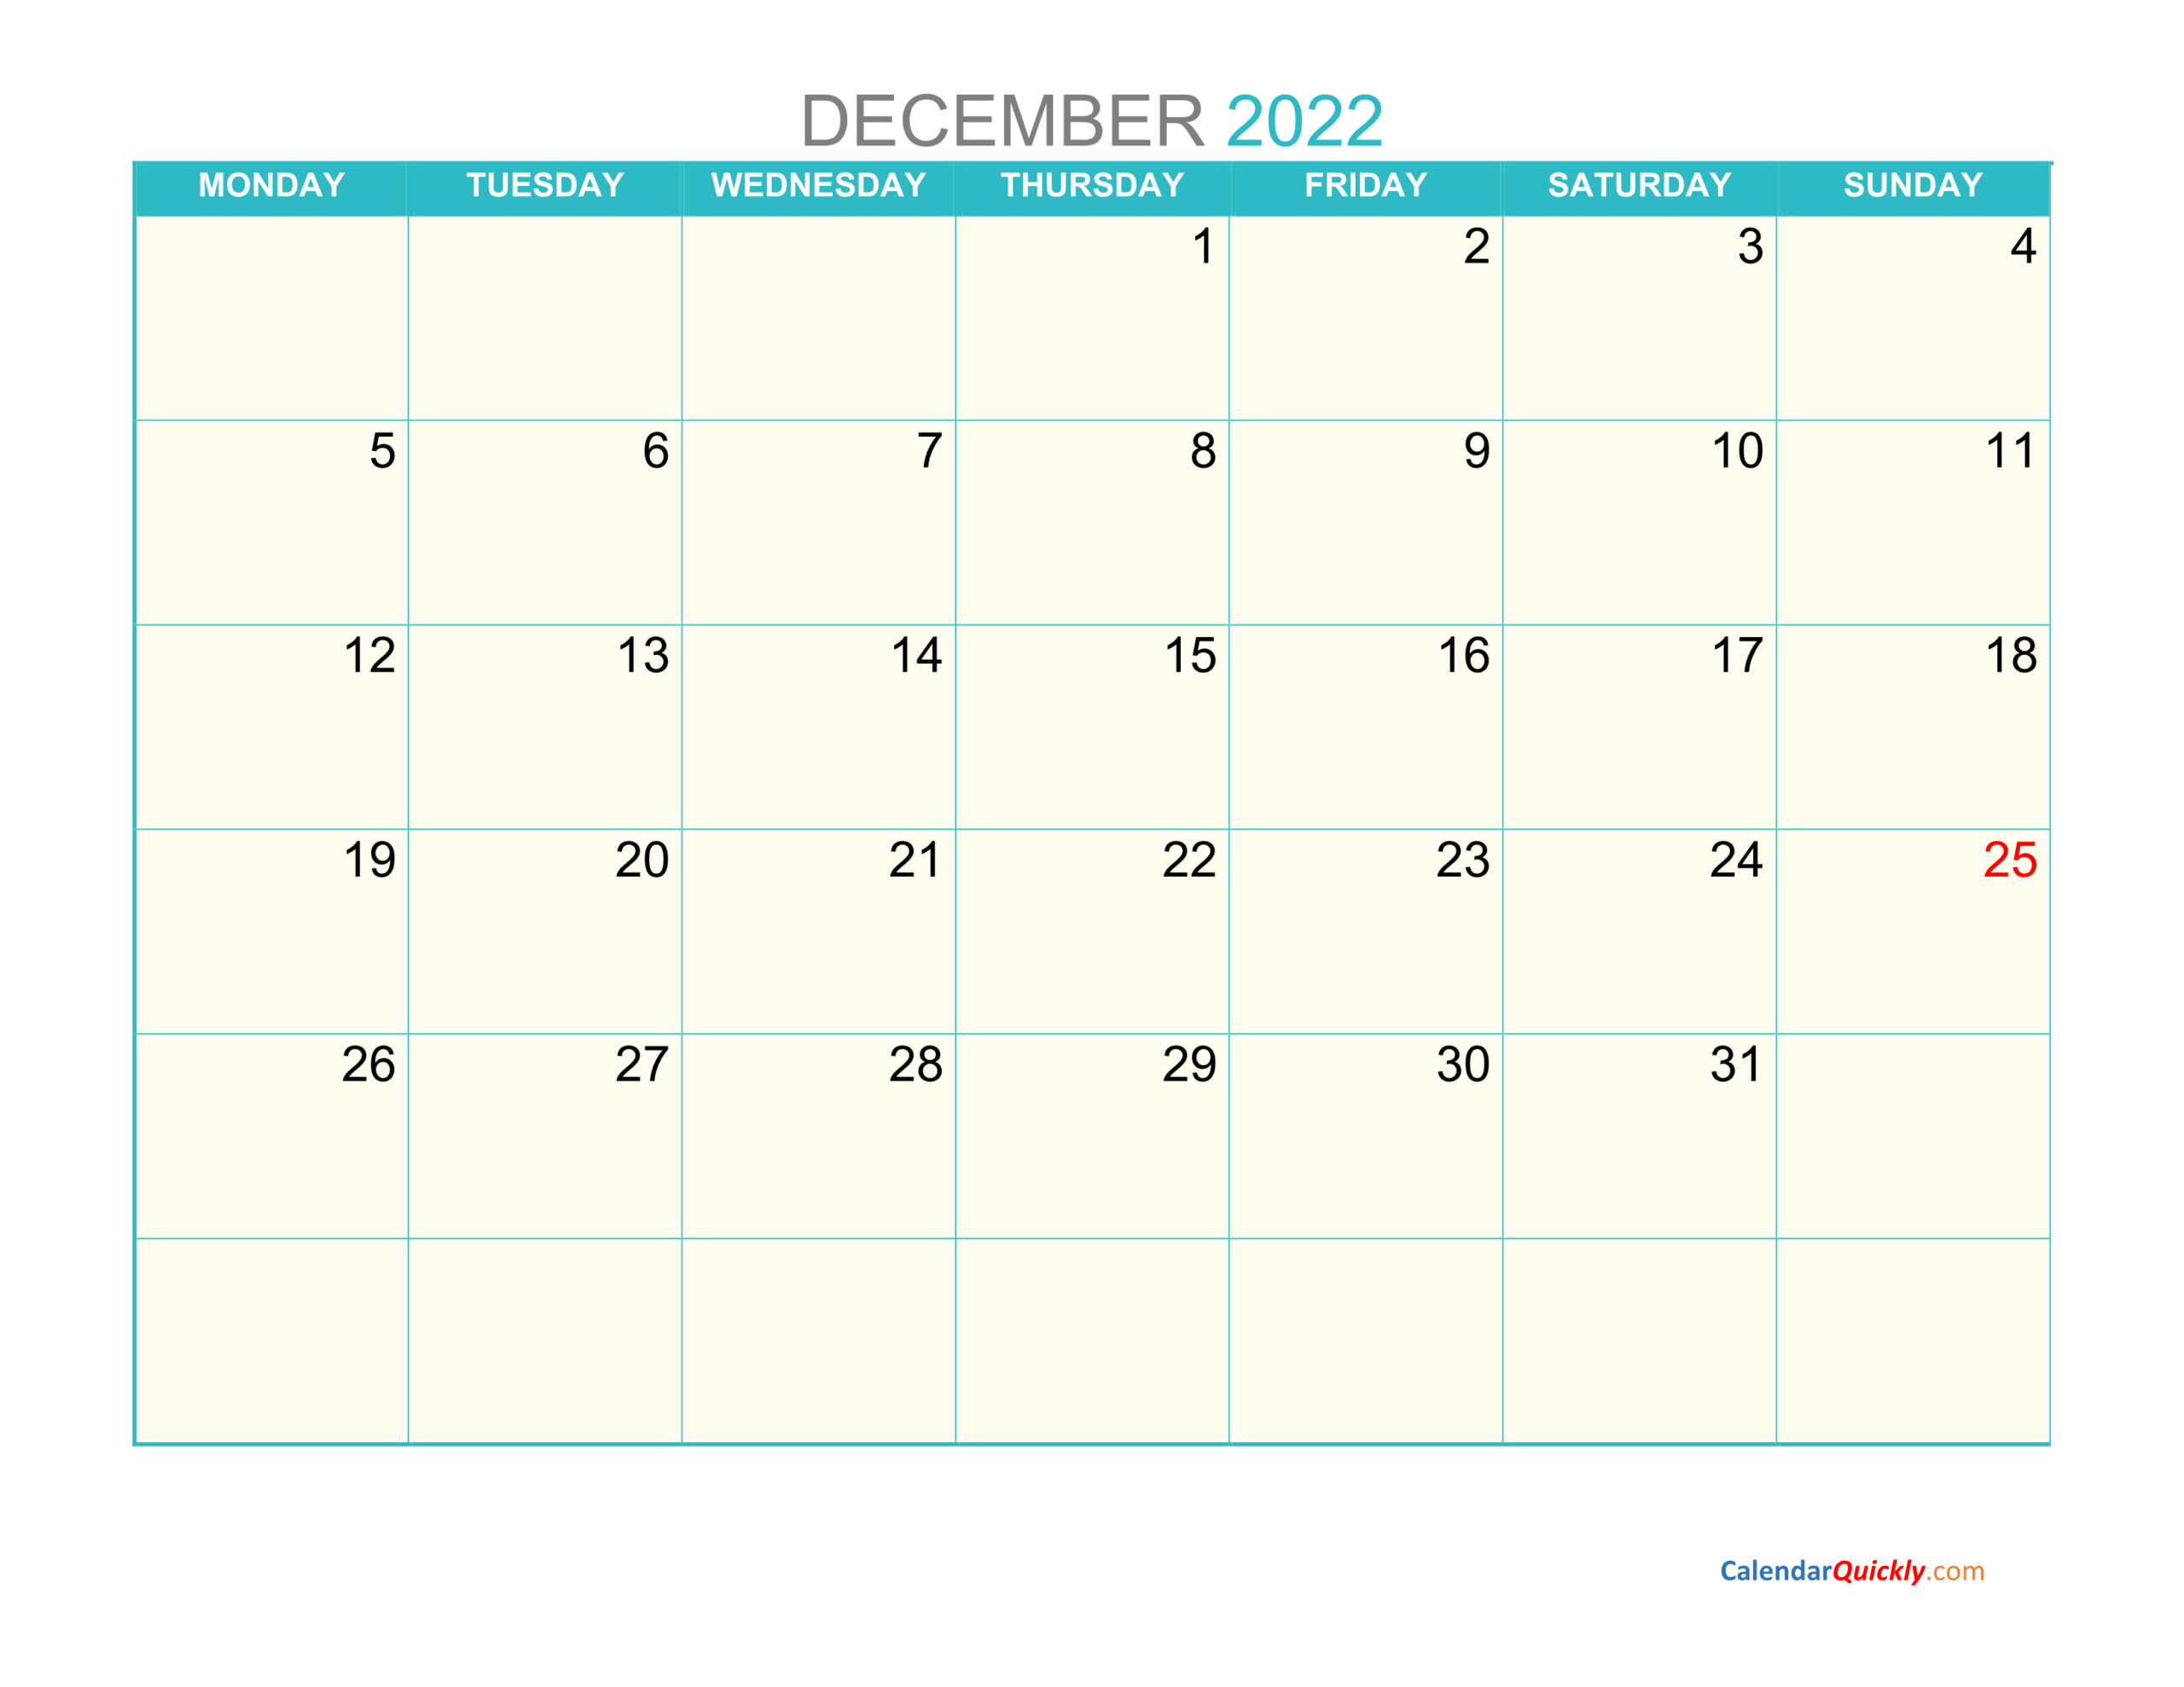 December Monday 2022 Calendar Printable | Calendar Quickly  Dec Jan Feb Calendar 2022